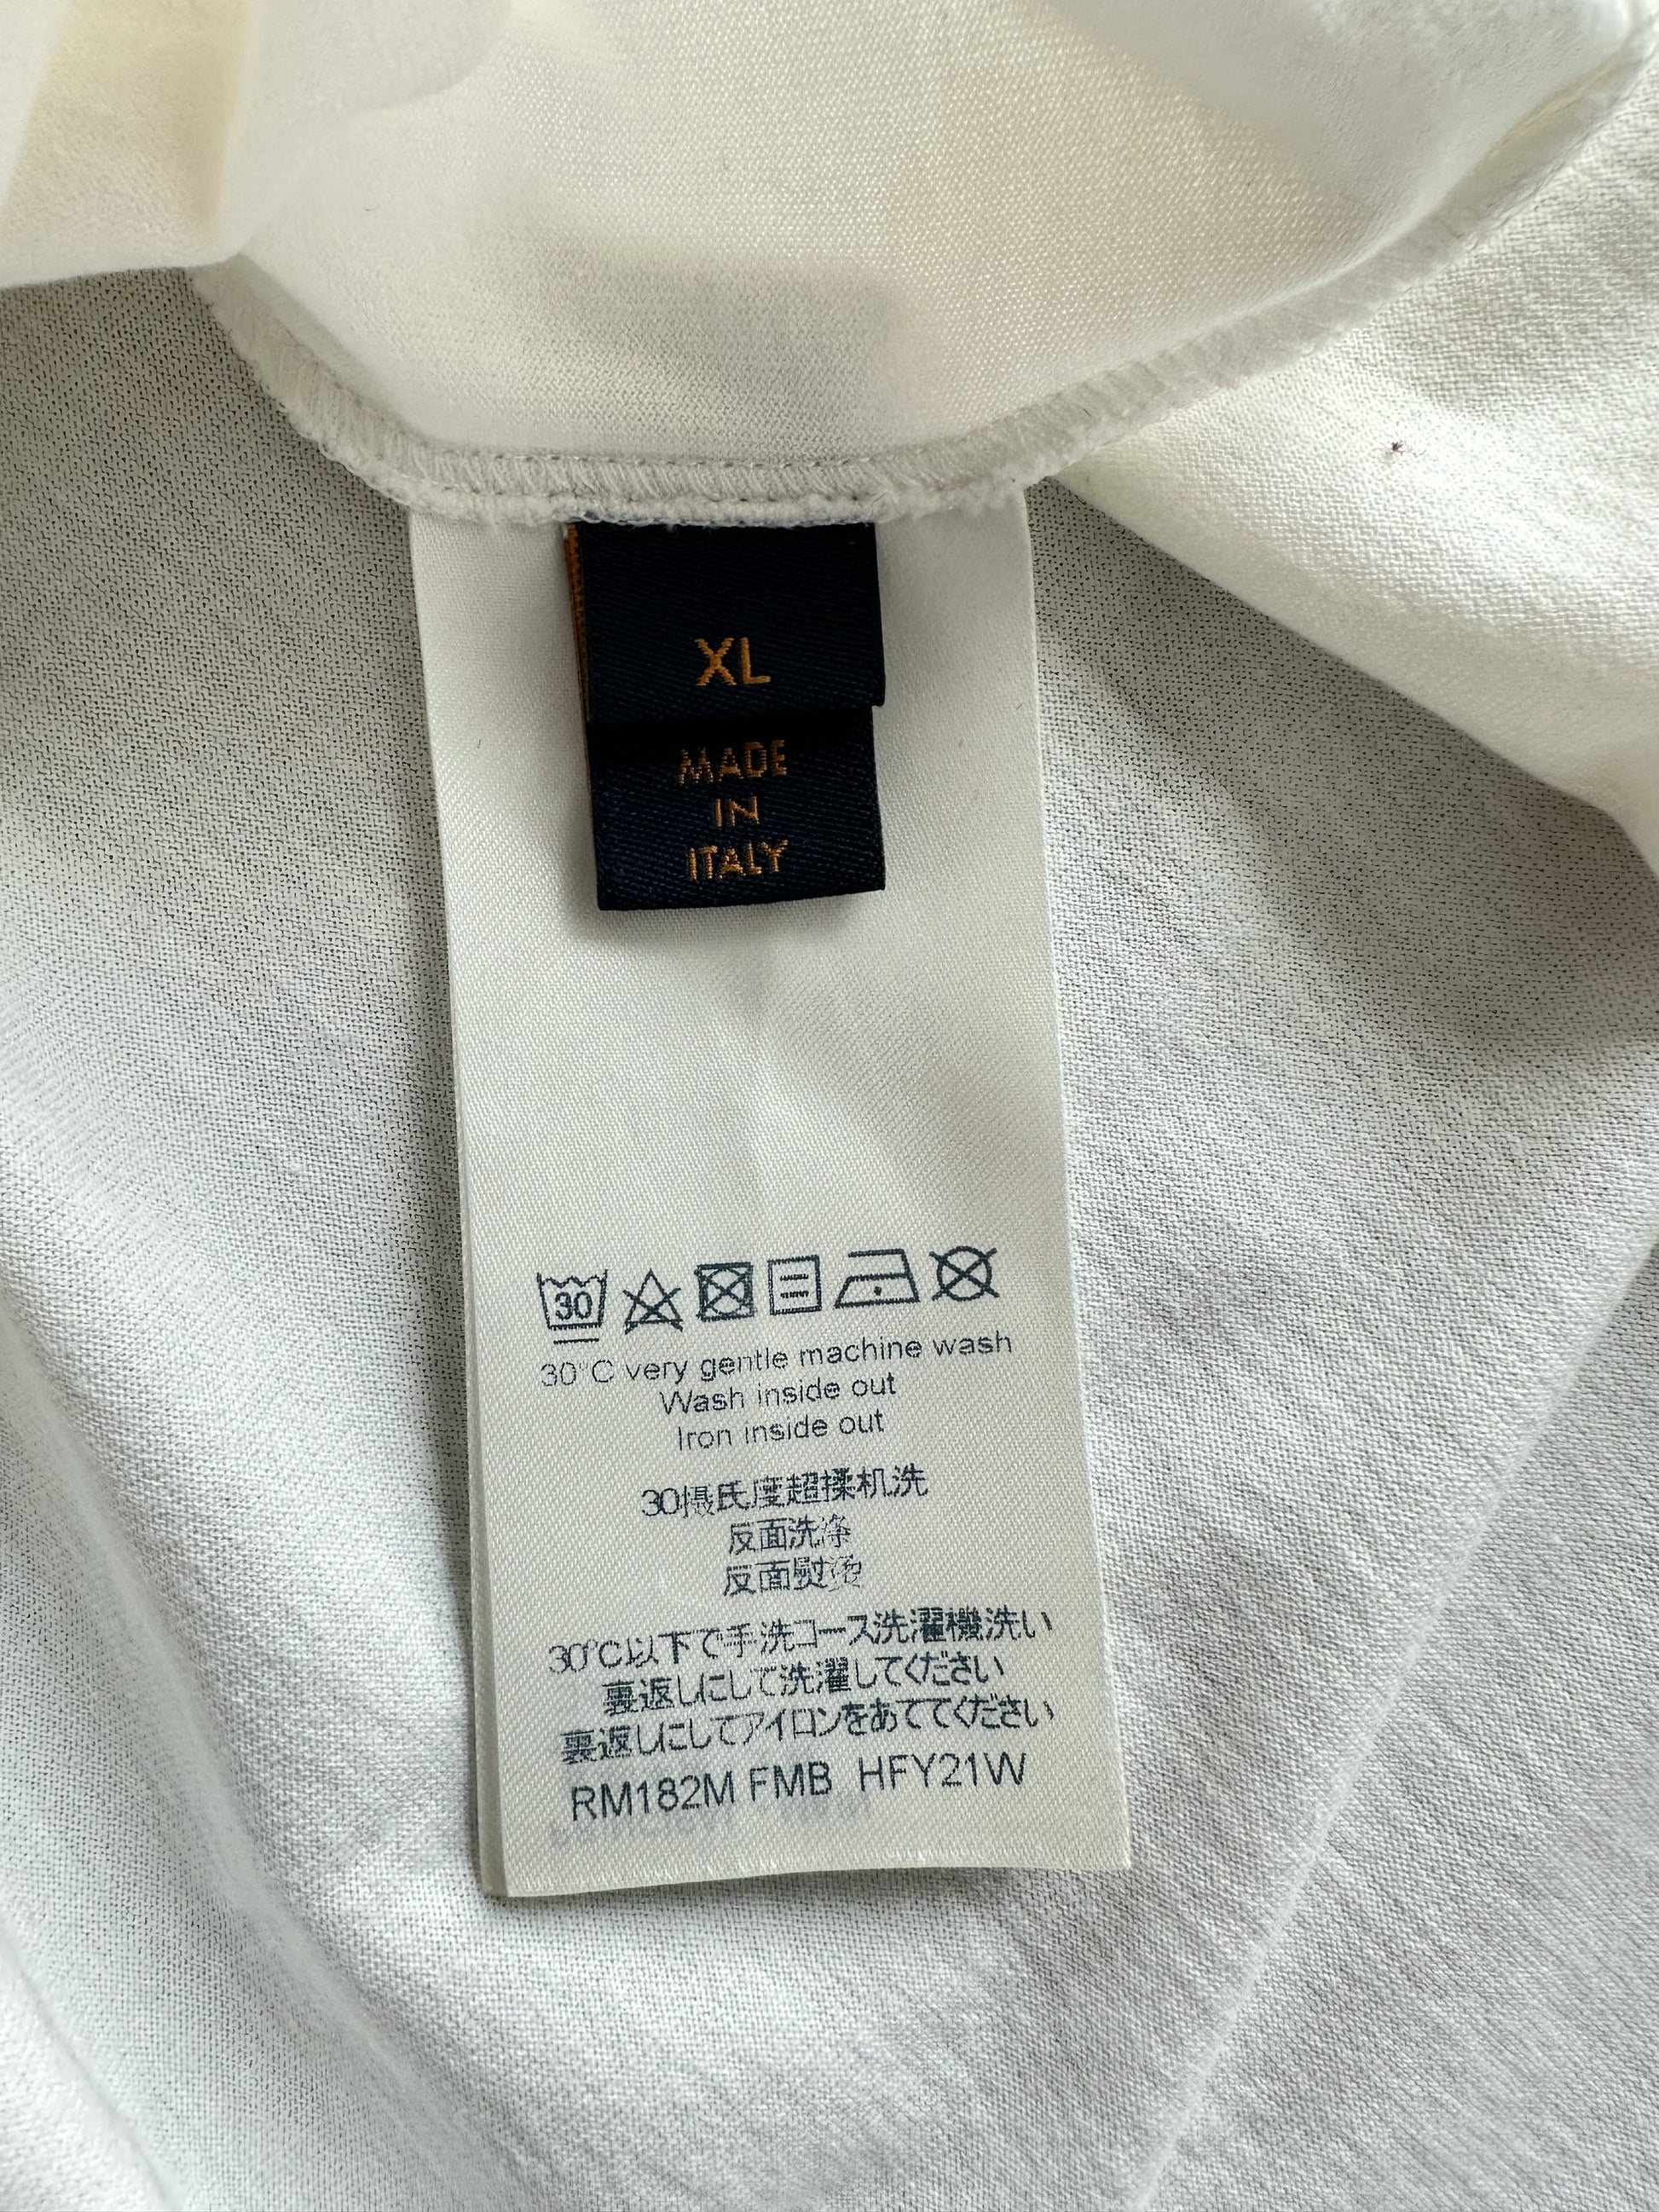 Authentic Louis Vuitton Upside Down Logo Sweatshirt for Sale in